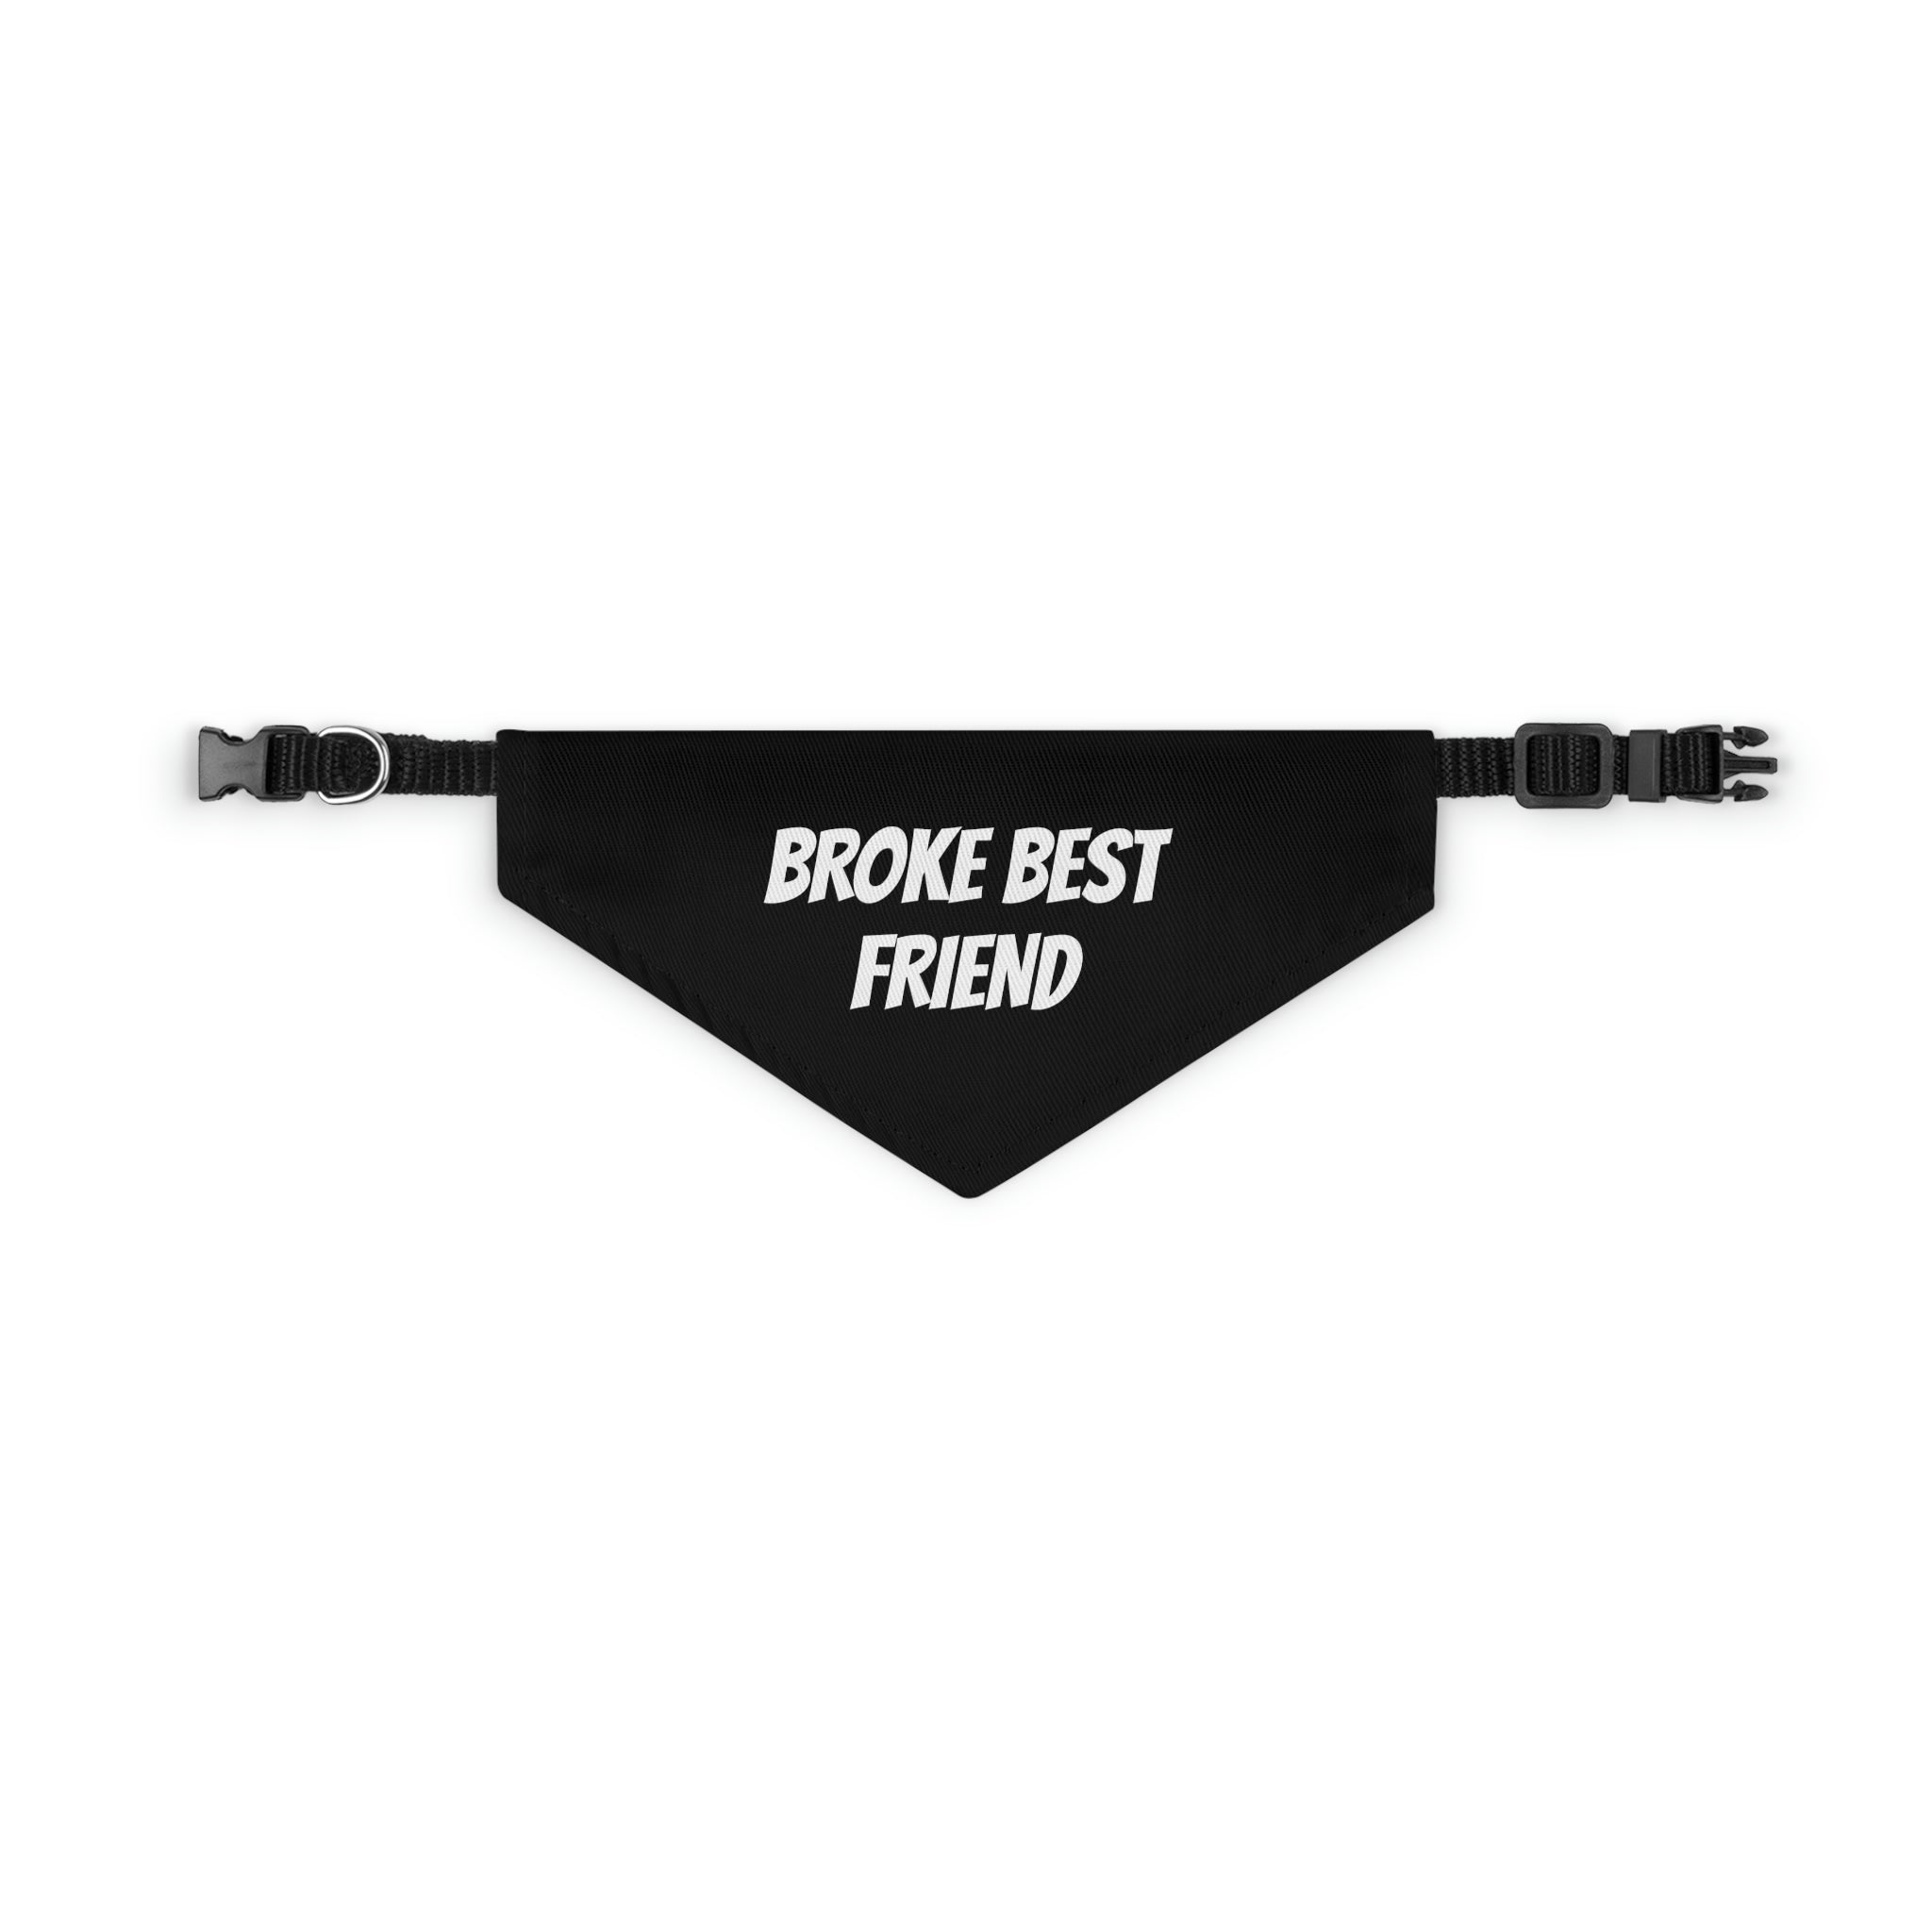 "Best Friend" Pet Bandana Collar - Paw Print Outlet